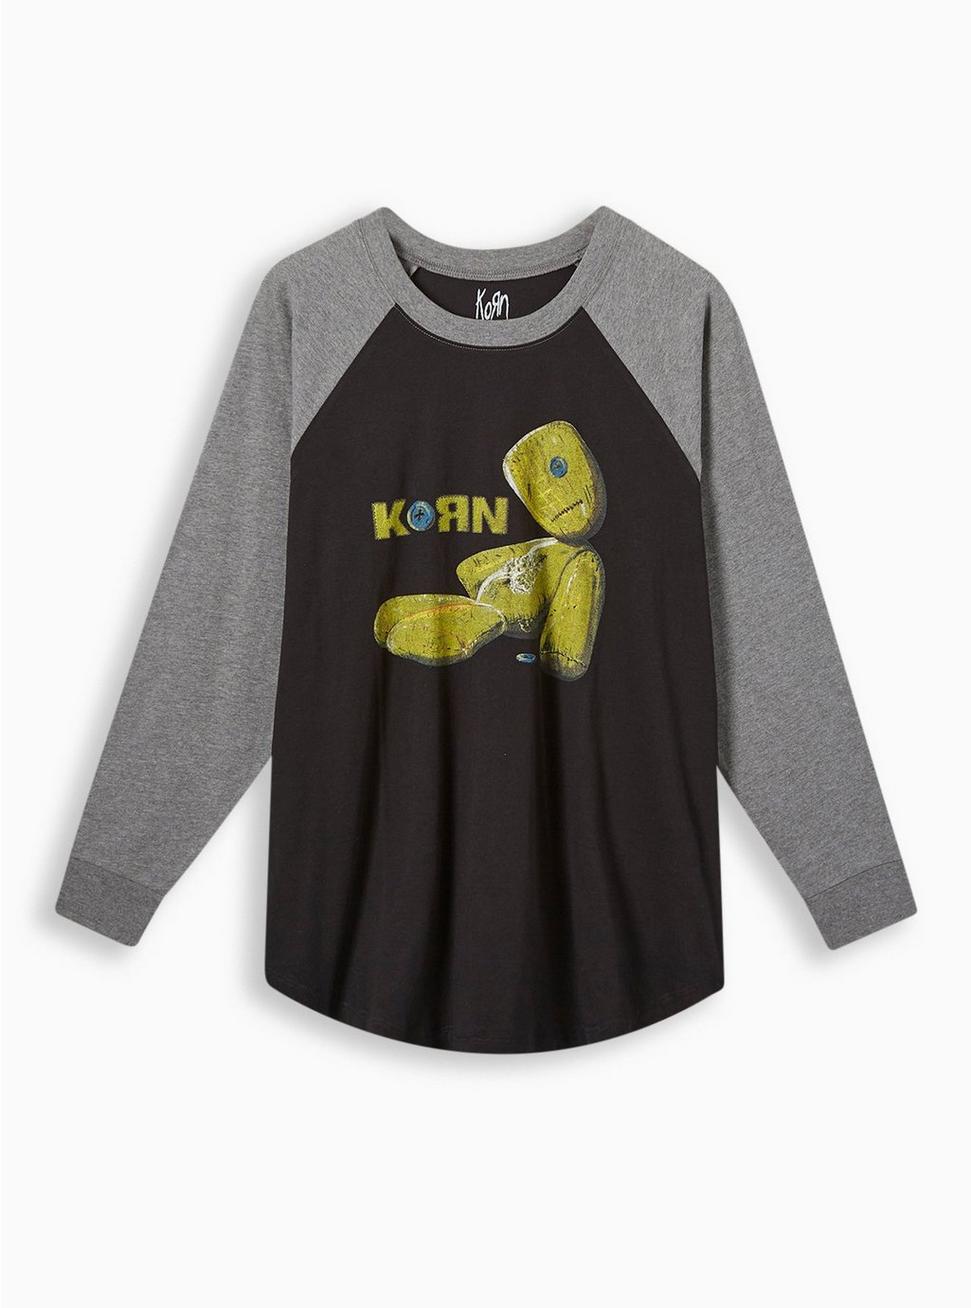 Plus Size Korn Doll Classic Fit Cotton Raglan Long Sleeve Top, DEEP BLACK, hi-res